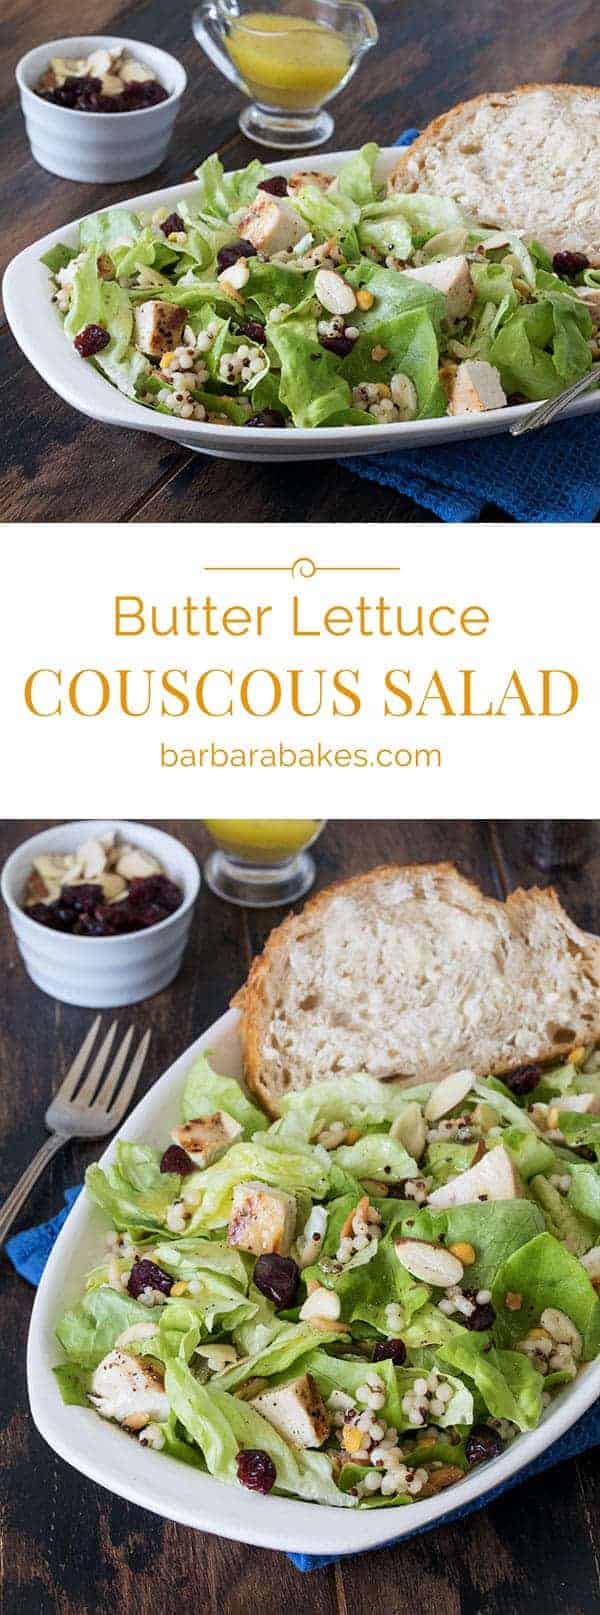 Butter Lettuce Couscous Chicken Salad Collage